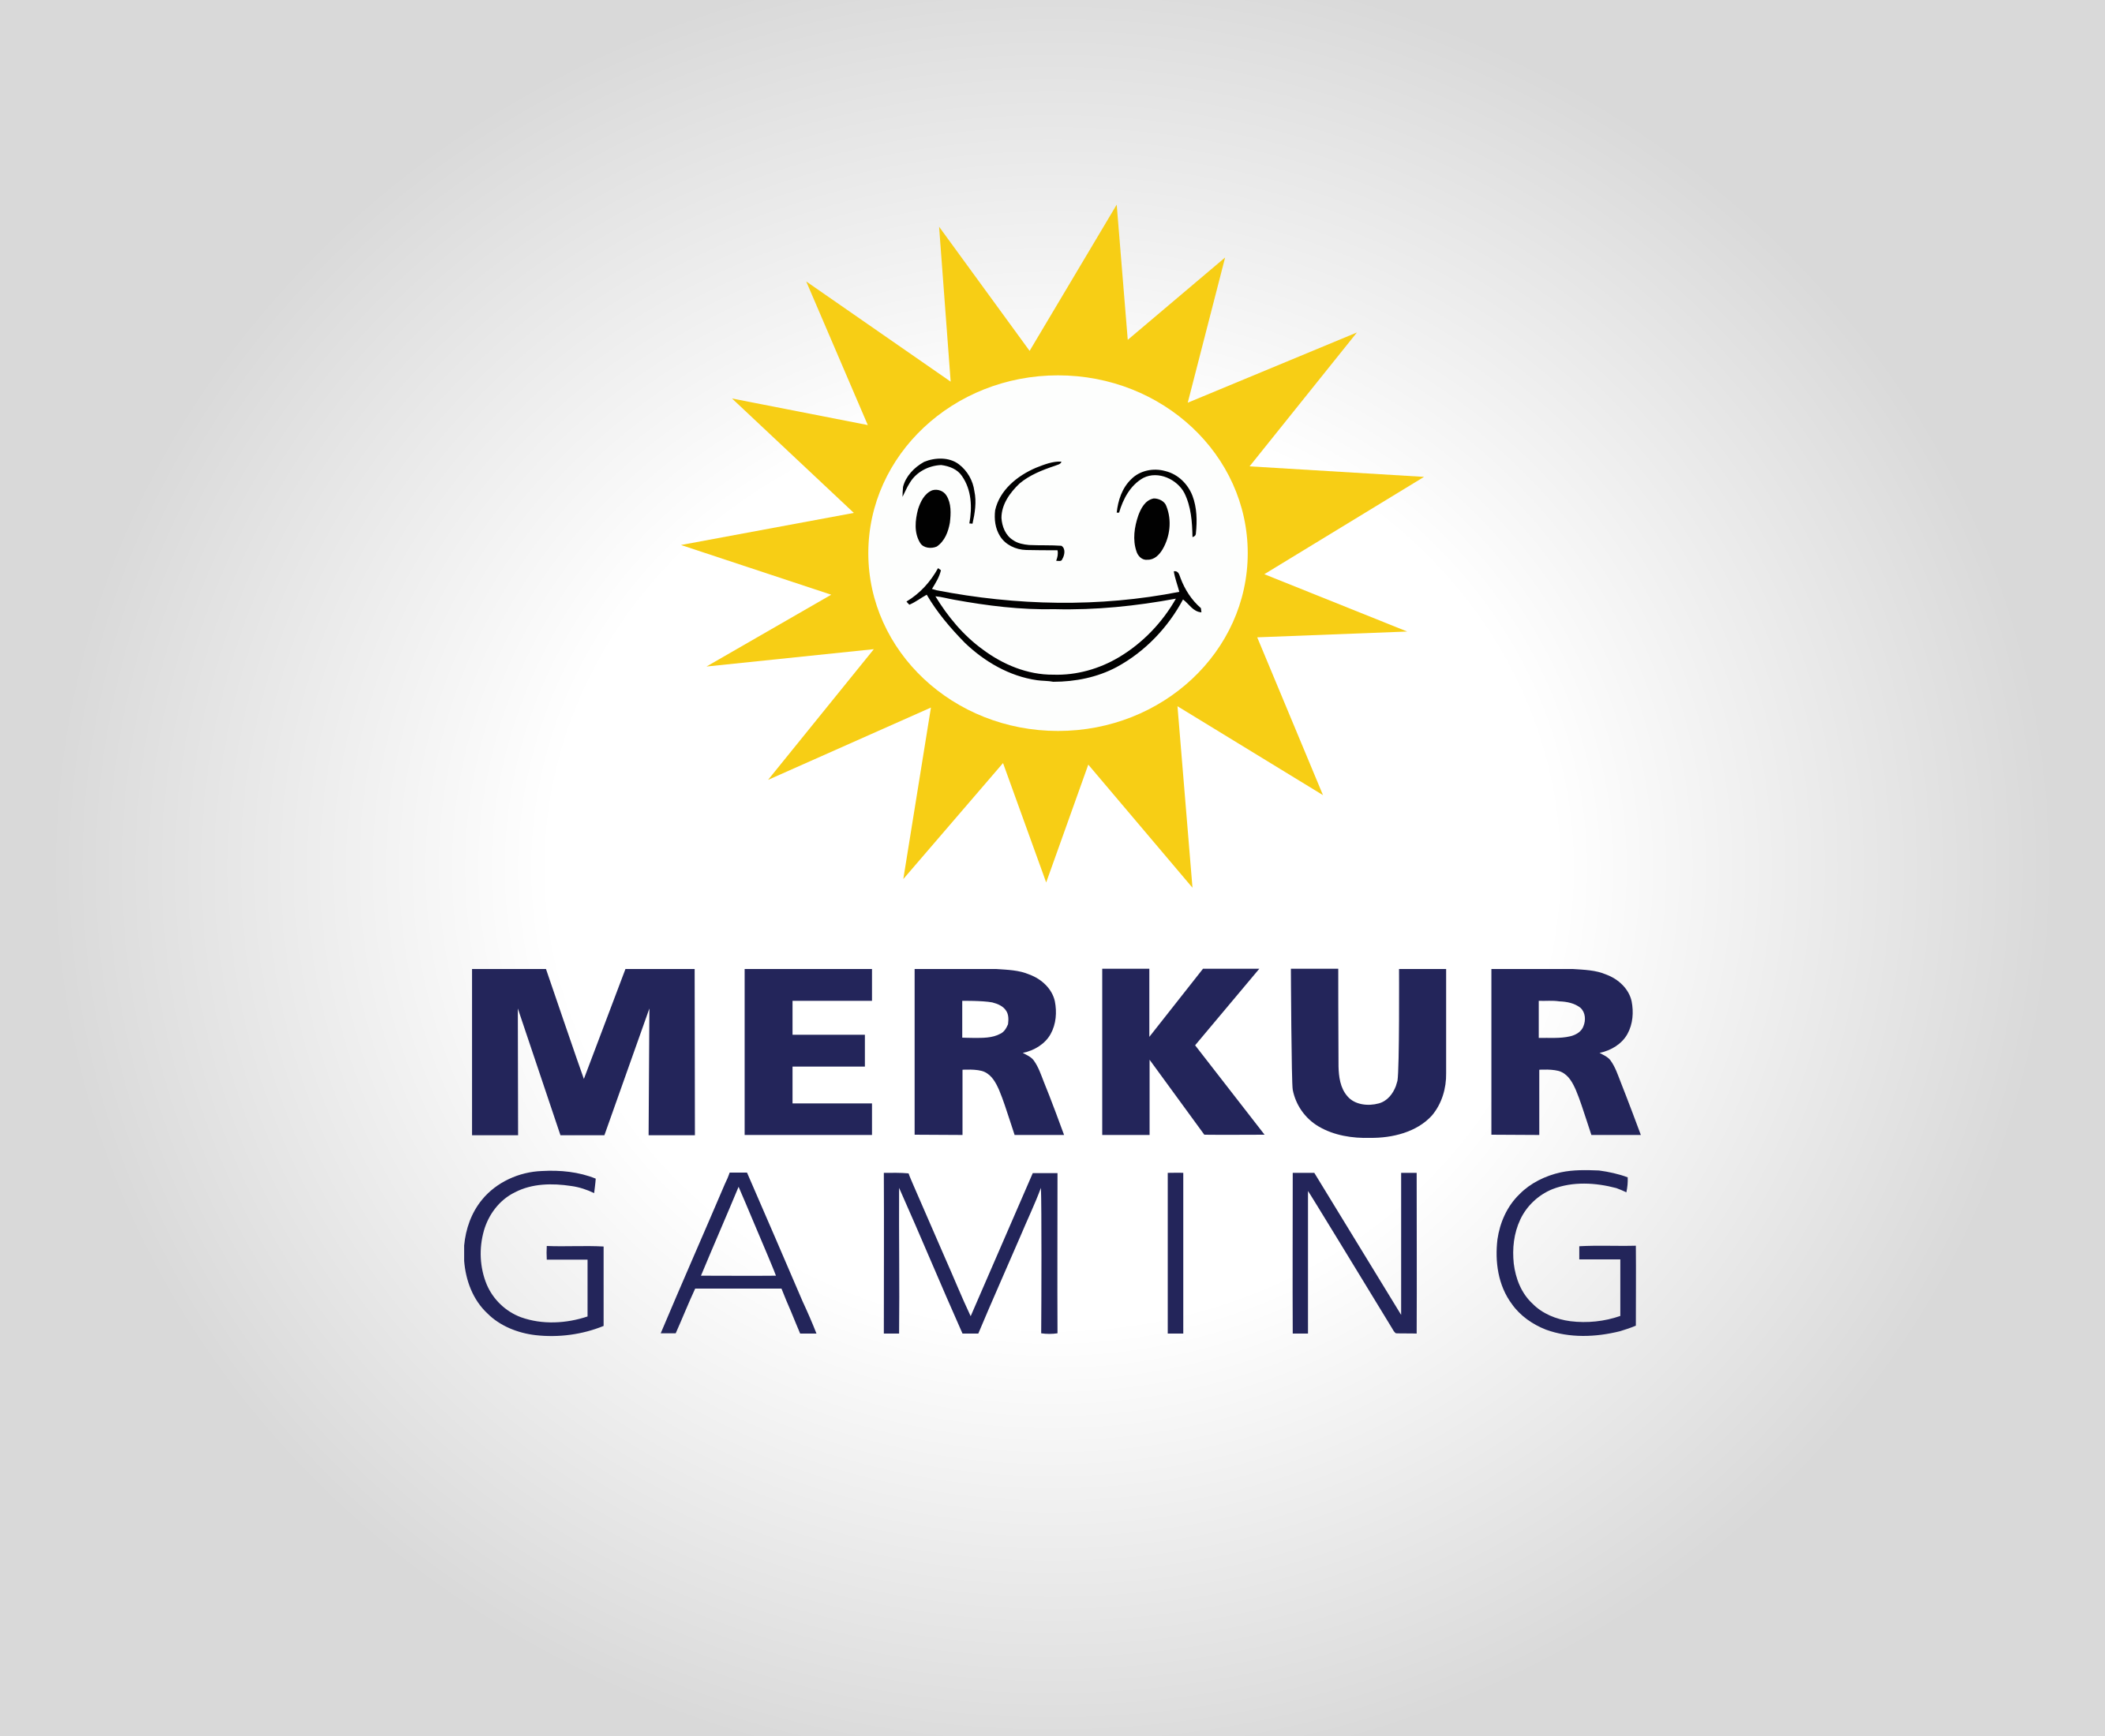 Компания Merkur